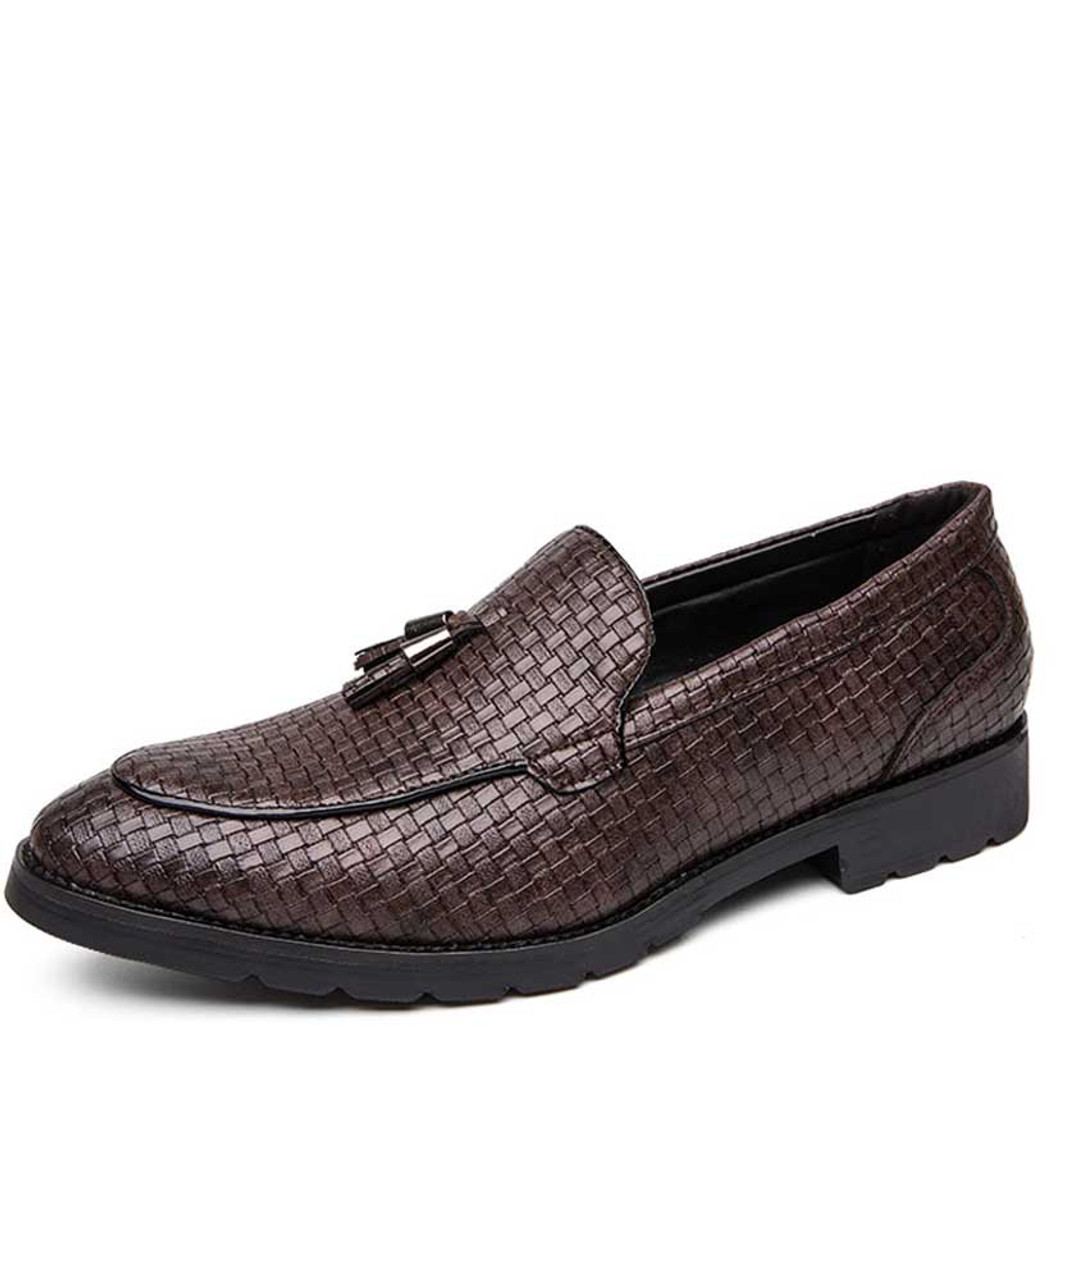 Brown tassel check pattern leather slip on dress shoe | Mens dress ...